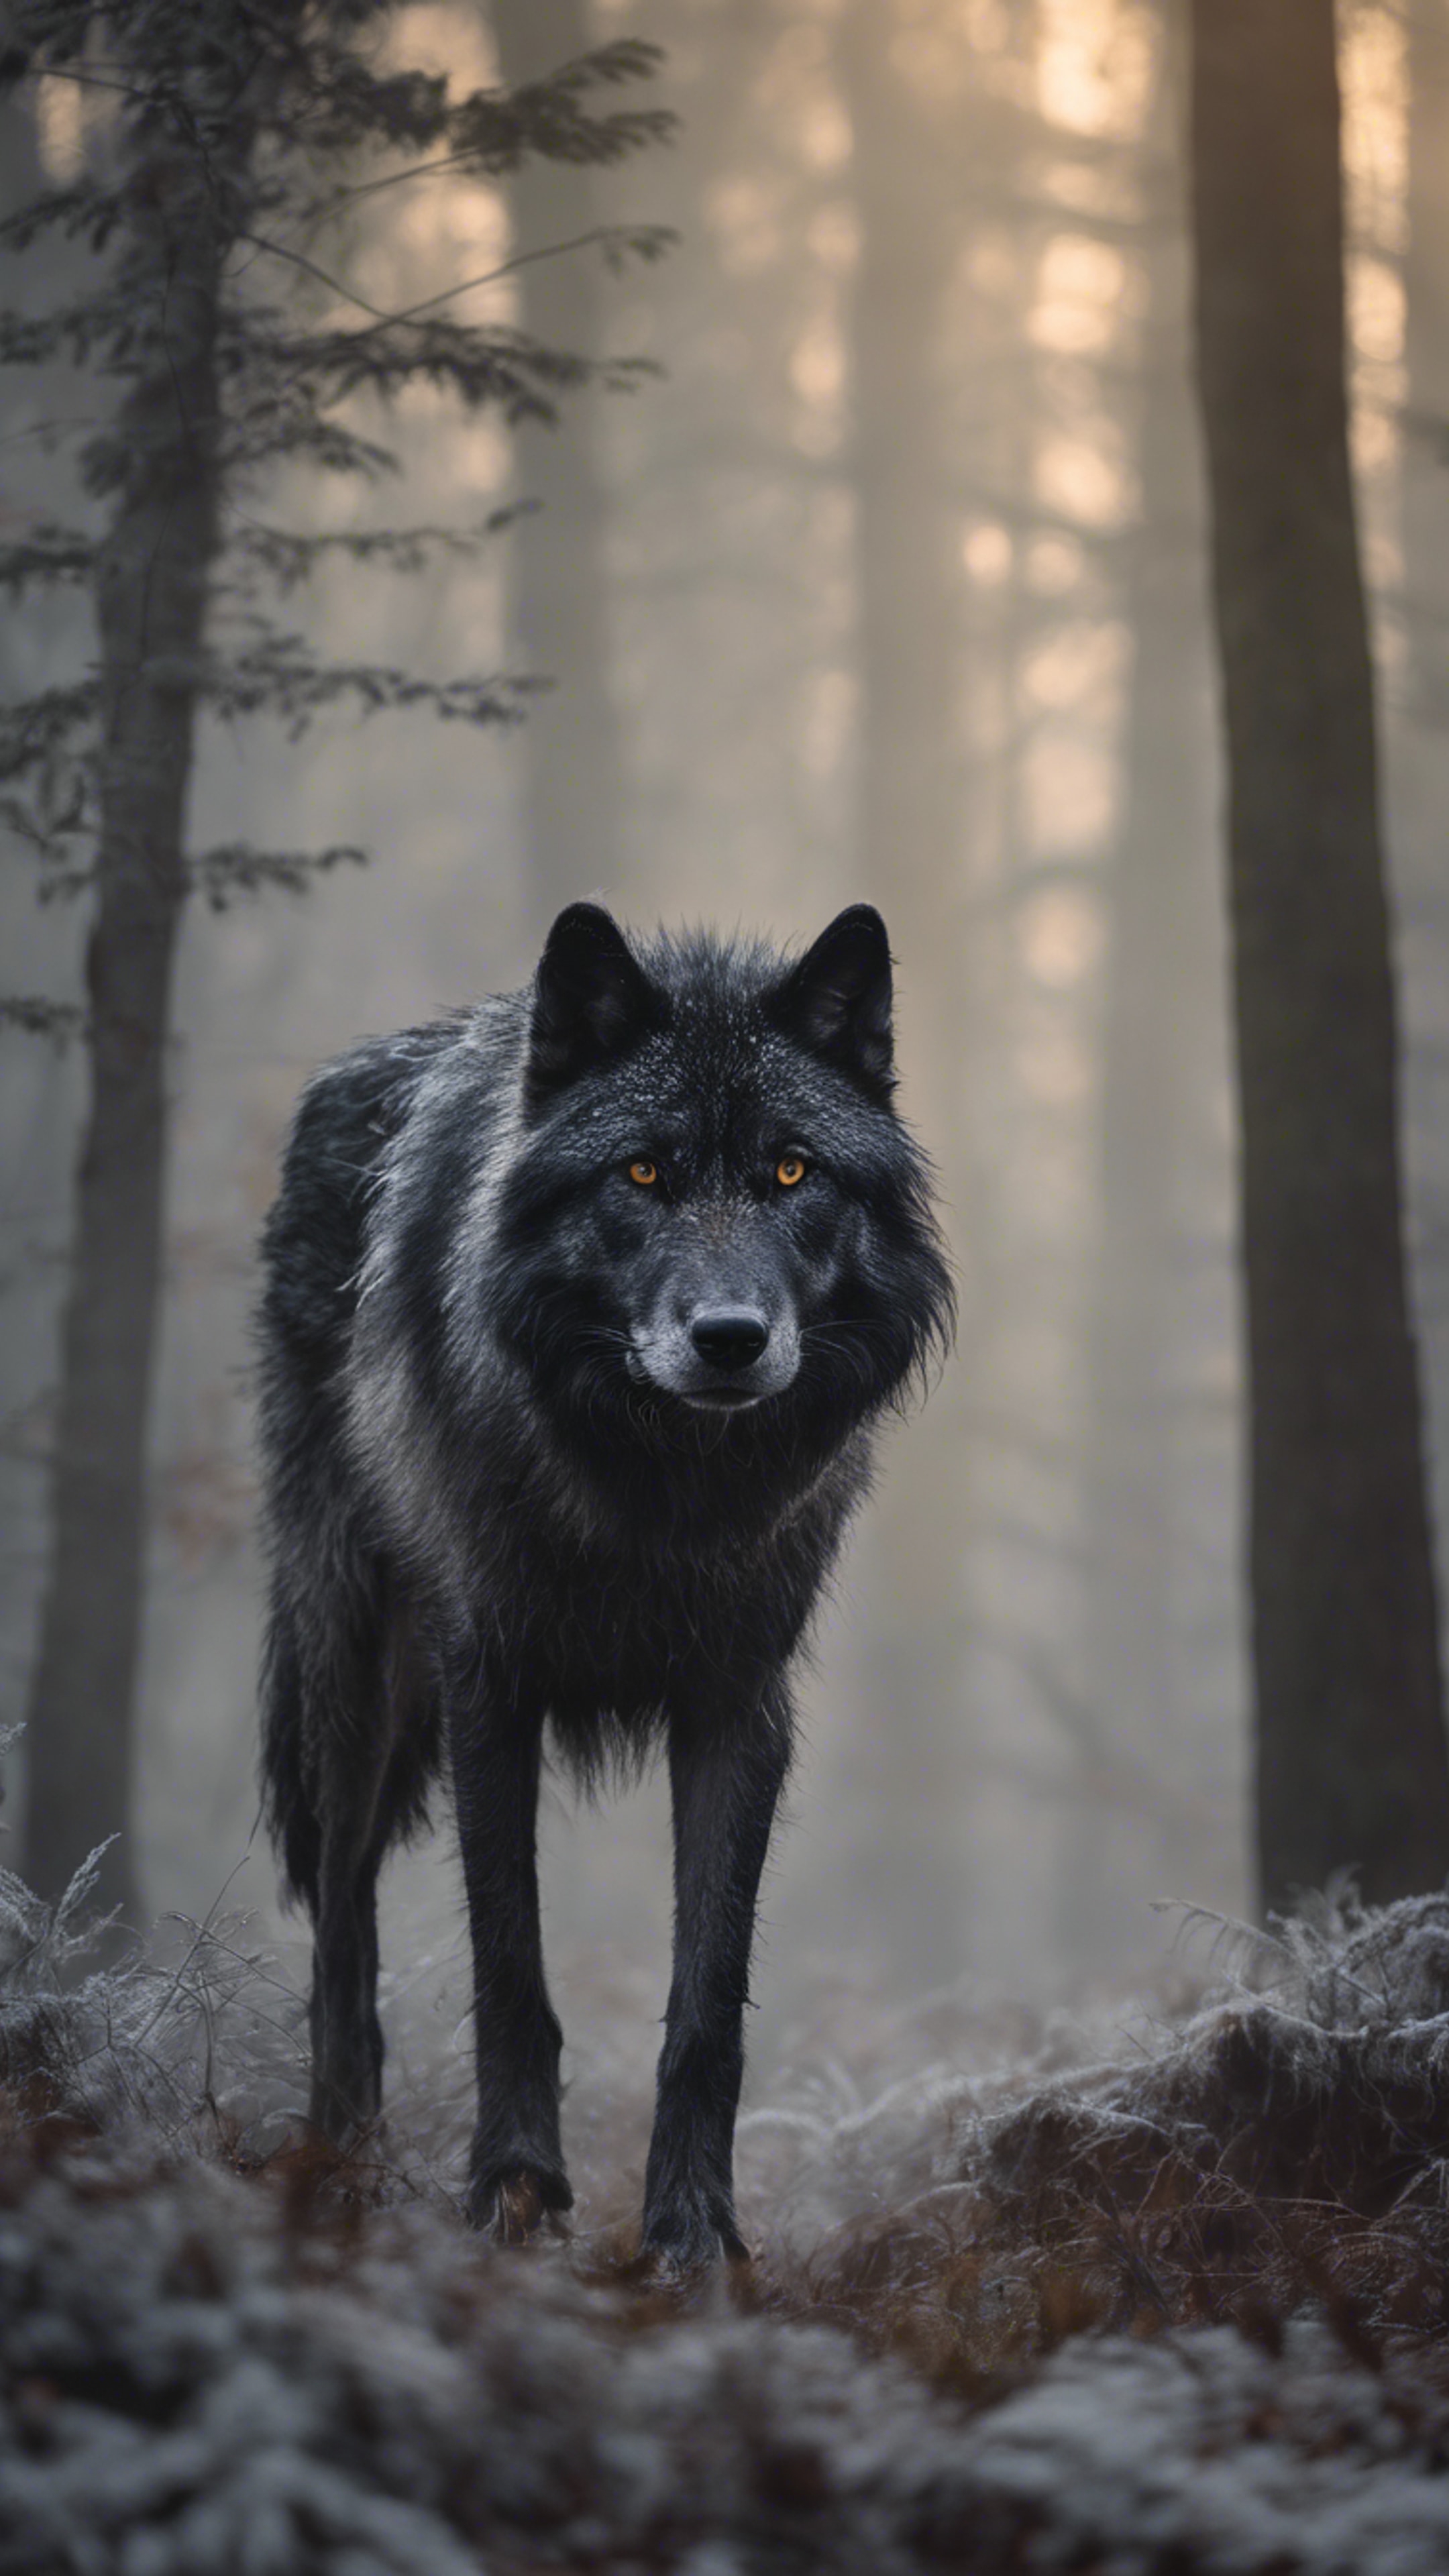 A cool black and gray shaggy wolf prowling through a mist-filled forest at dawn. ورق الجدران[e0adfa1209b347ac9a7e]